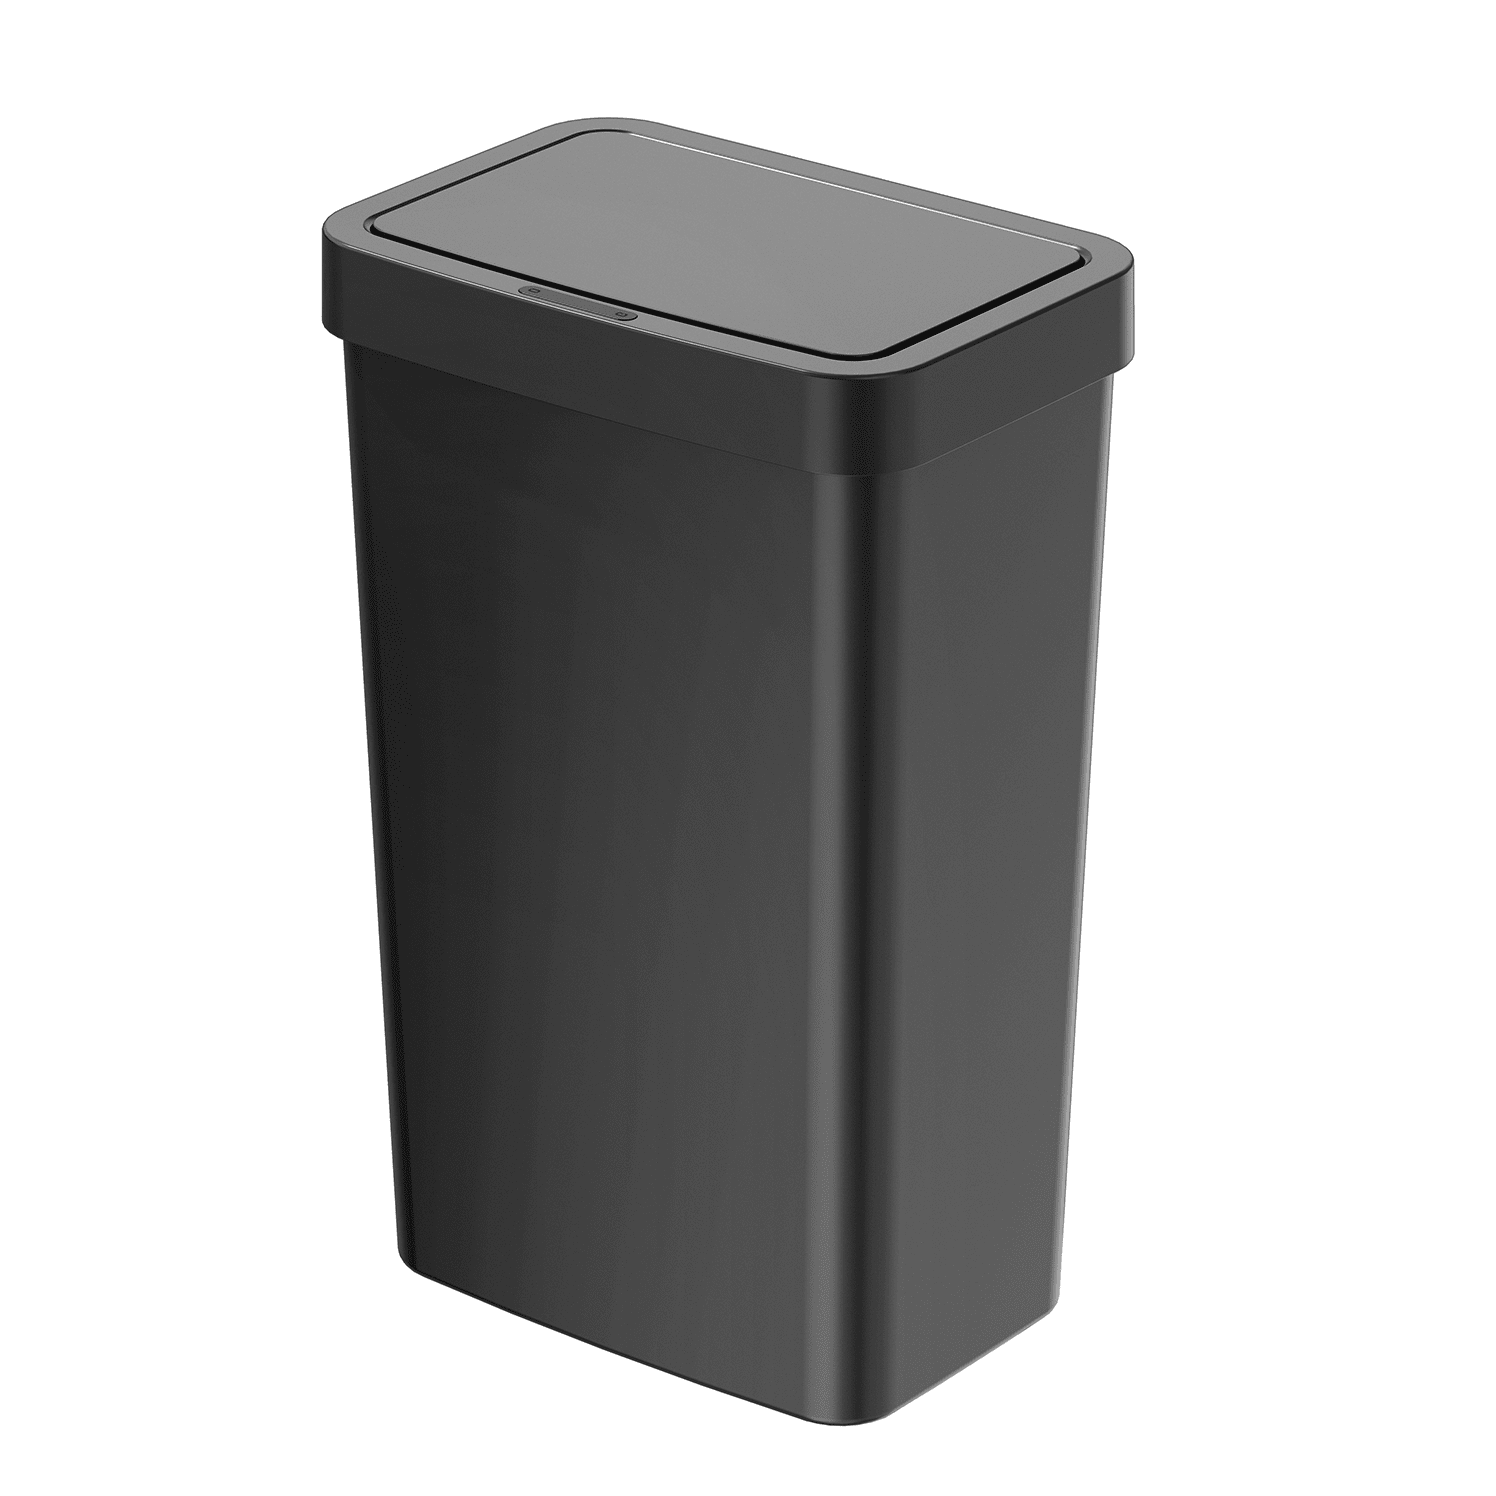 Mainstays 13.2 Gallon Trash Can, Plastic Motion Sensor Kitchen Trash Can, Black $29.94